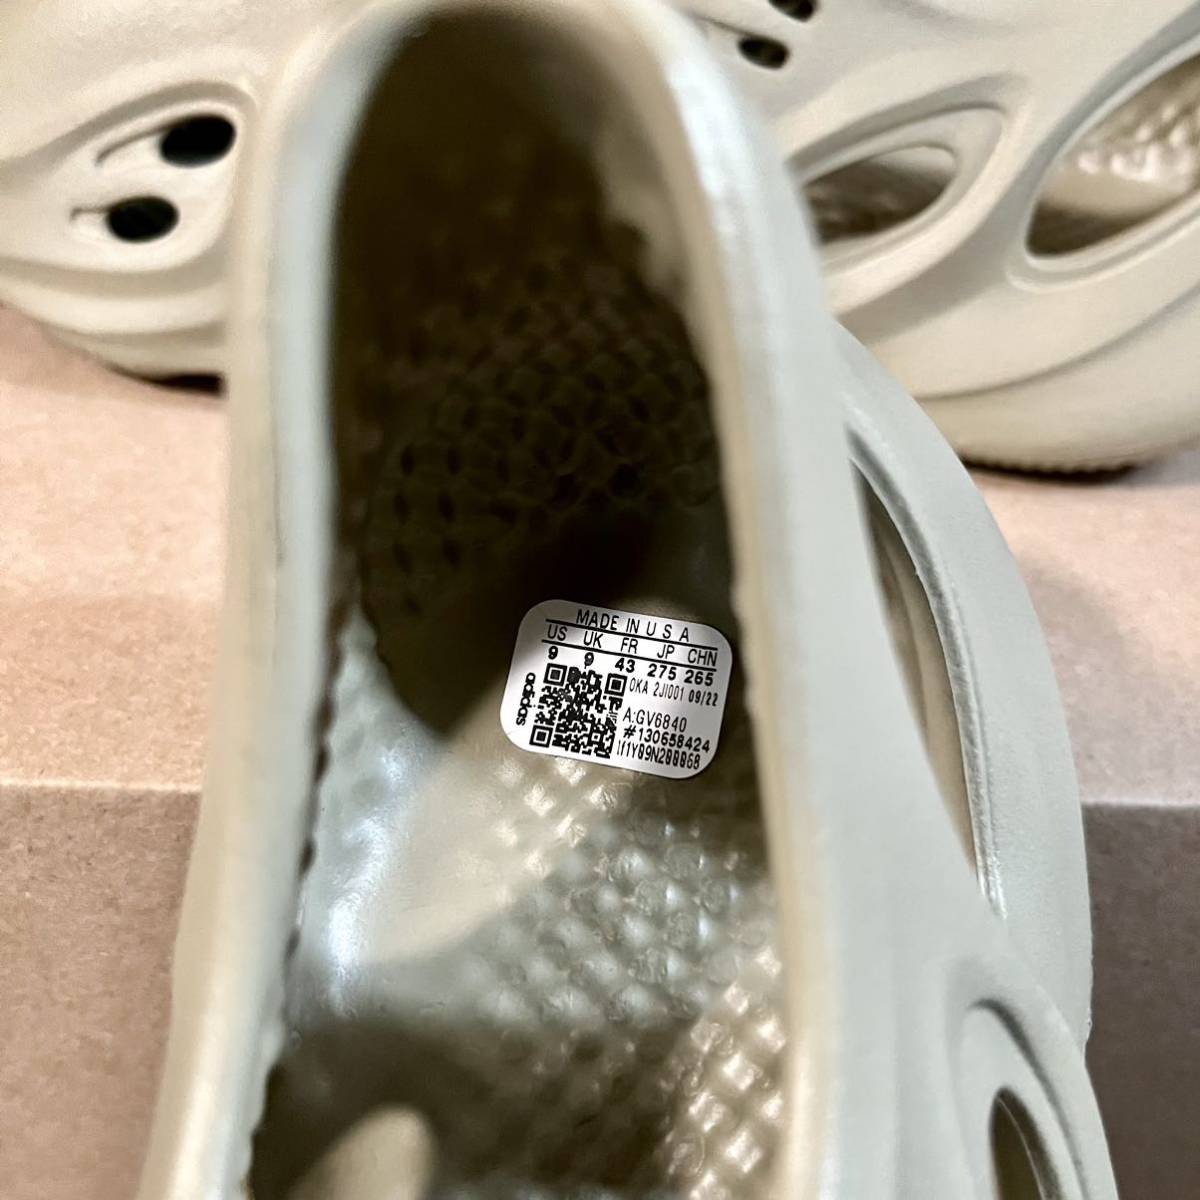 adidas YEEZY Foam Runner アディダス イージー フォームランナー Stone Salt ストーンソルト US9 27.5cm  USA 送料込